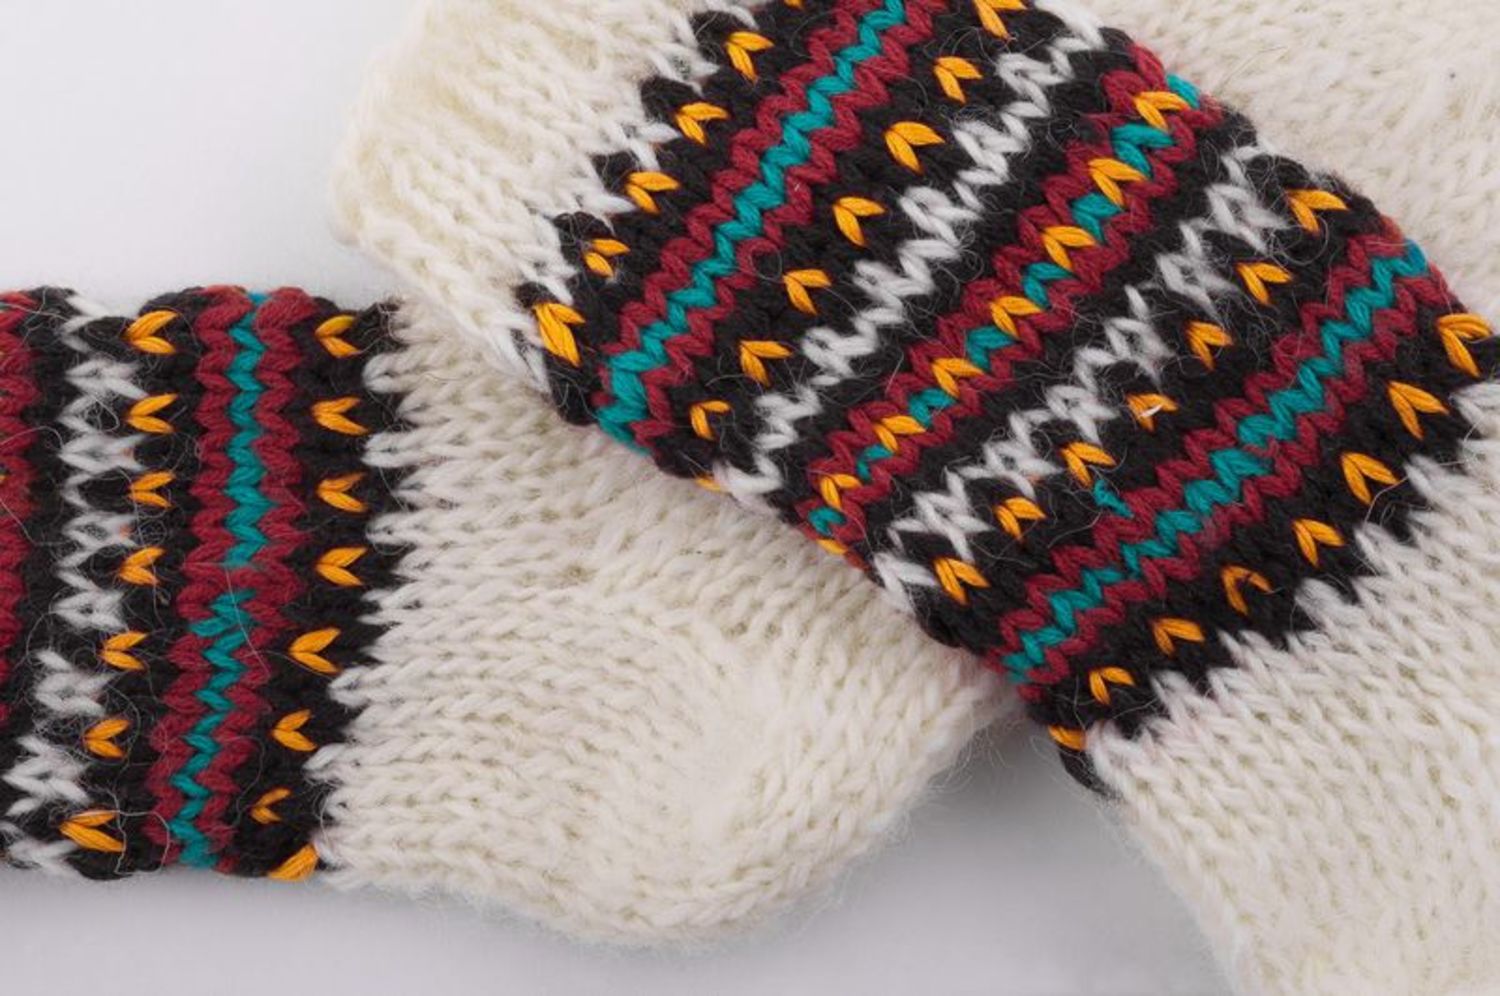 Hand knitted women's socks photo 3